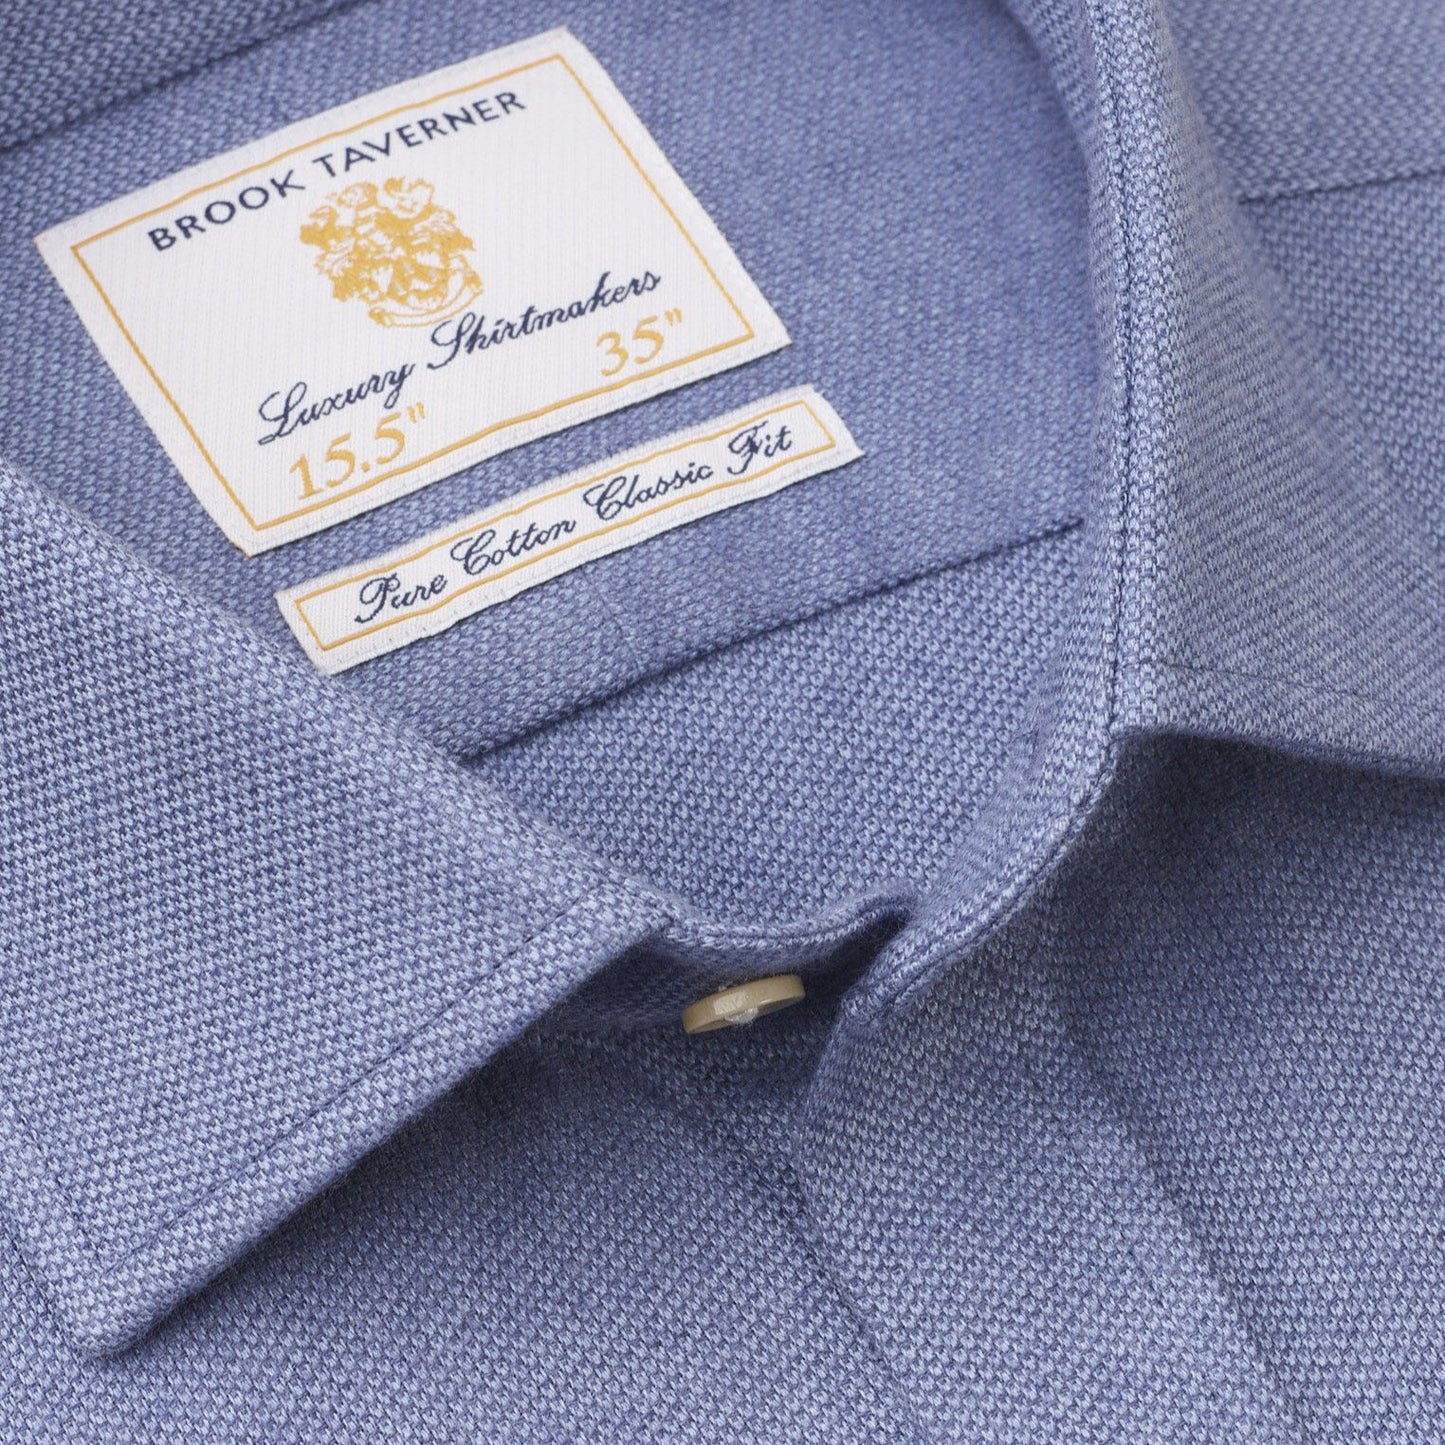 Supersoft Cotton Melange Shirt (Mid Blue)